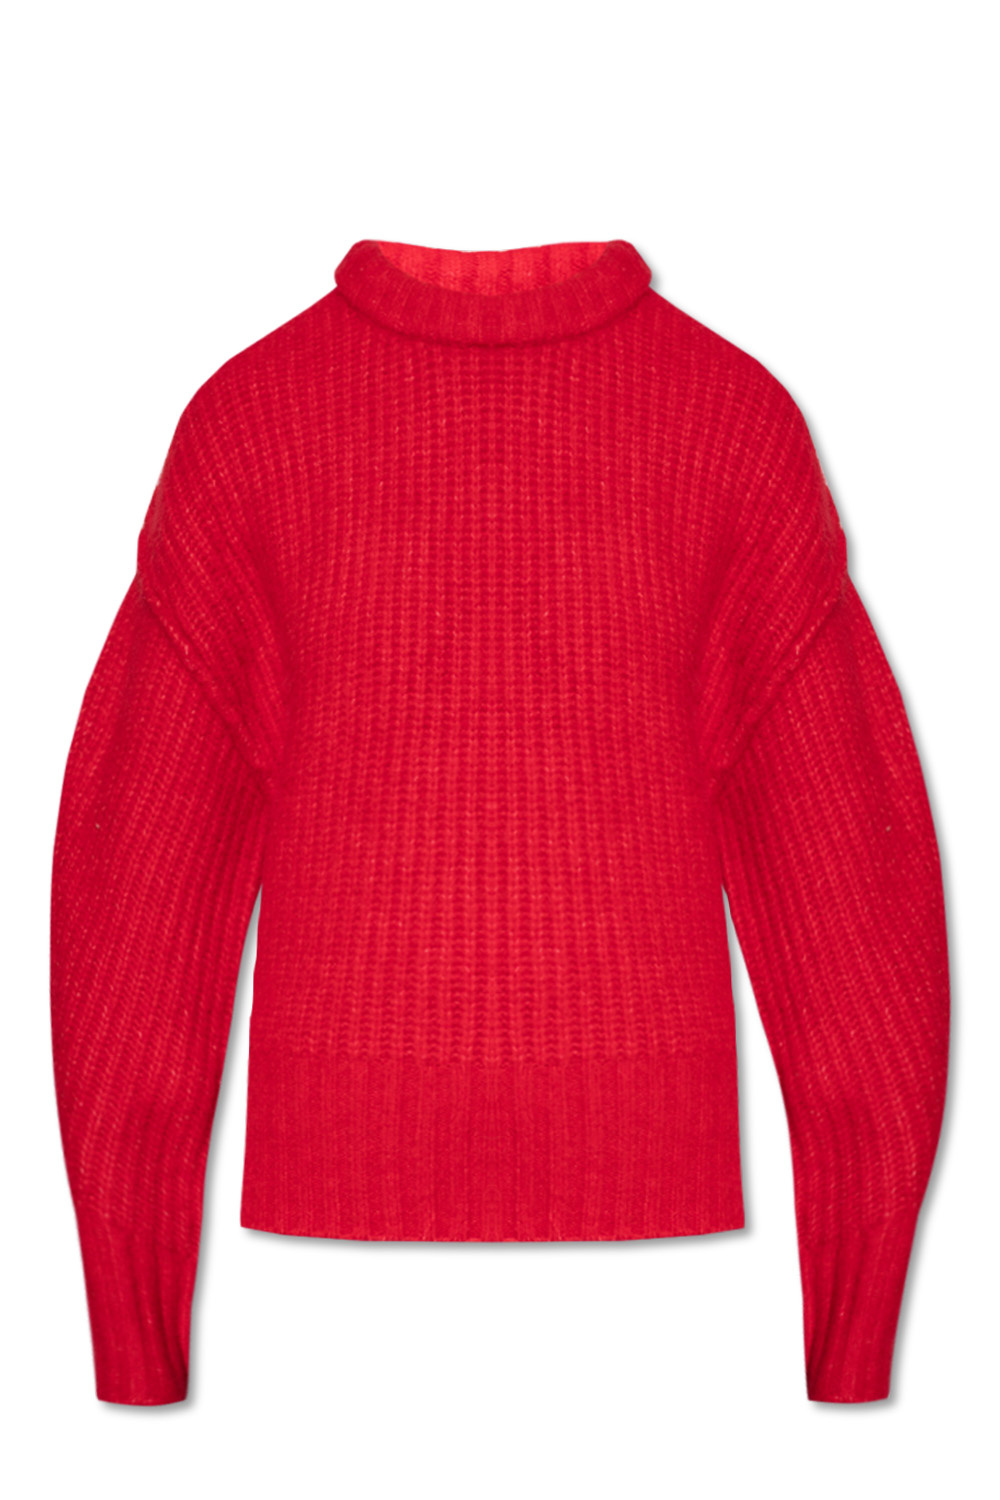 alberta ferretti red sweater, Men's Clothing, IetpShops